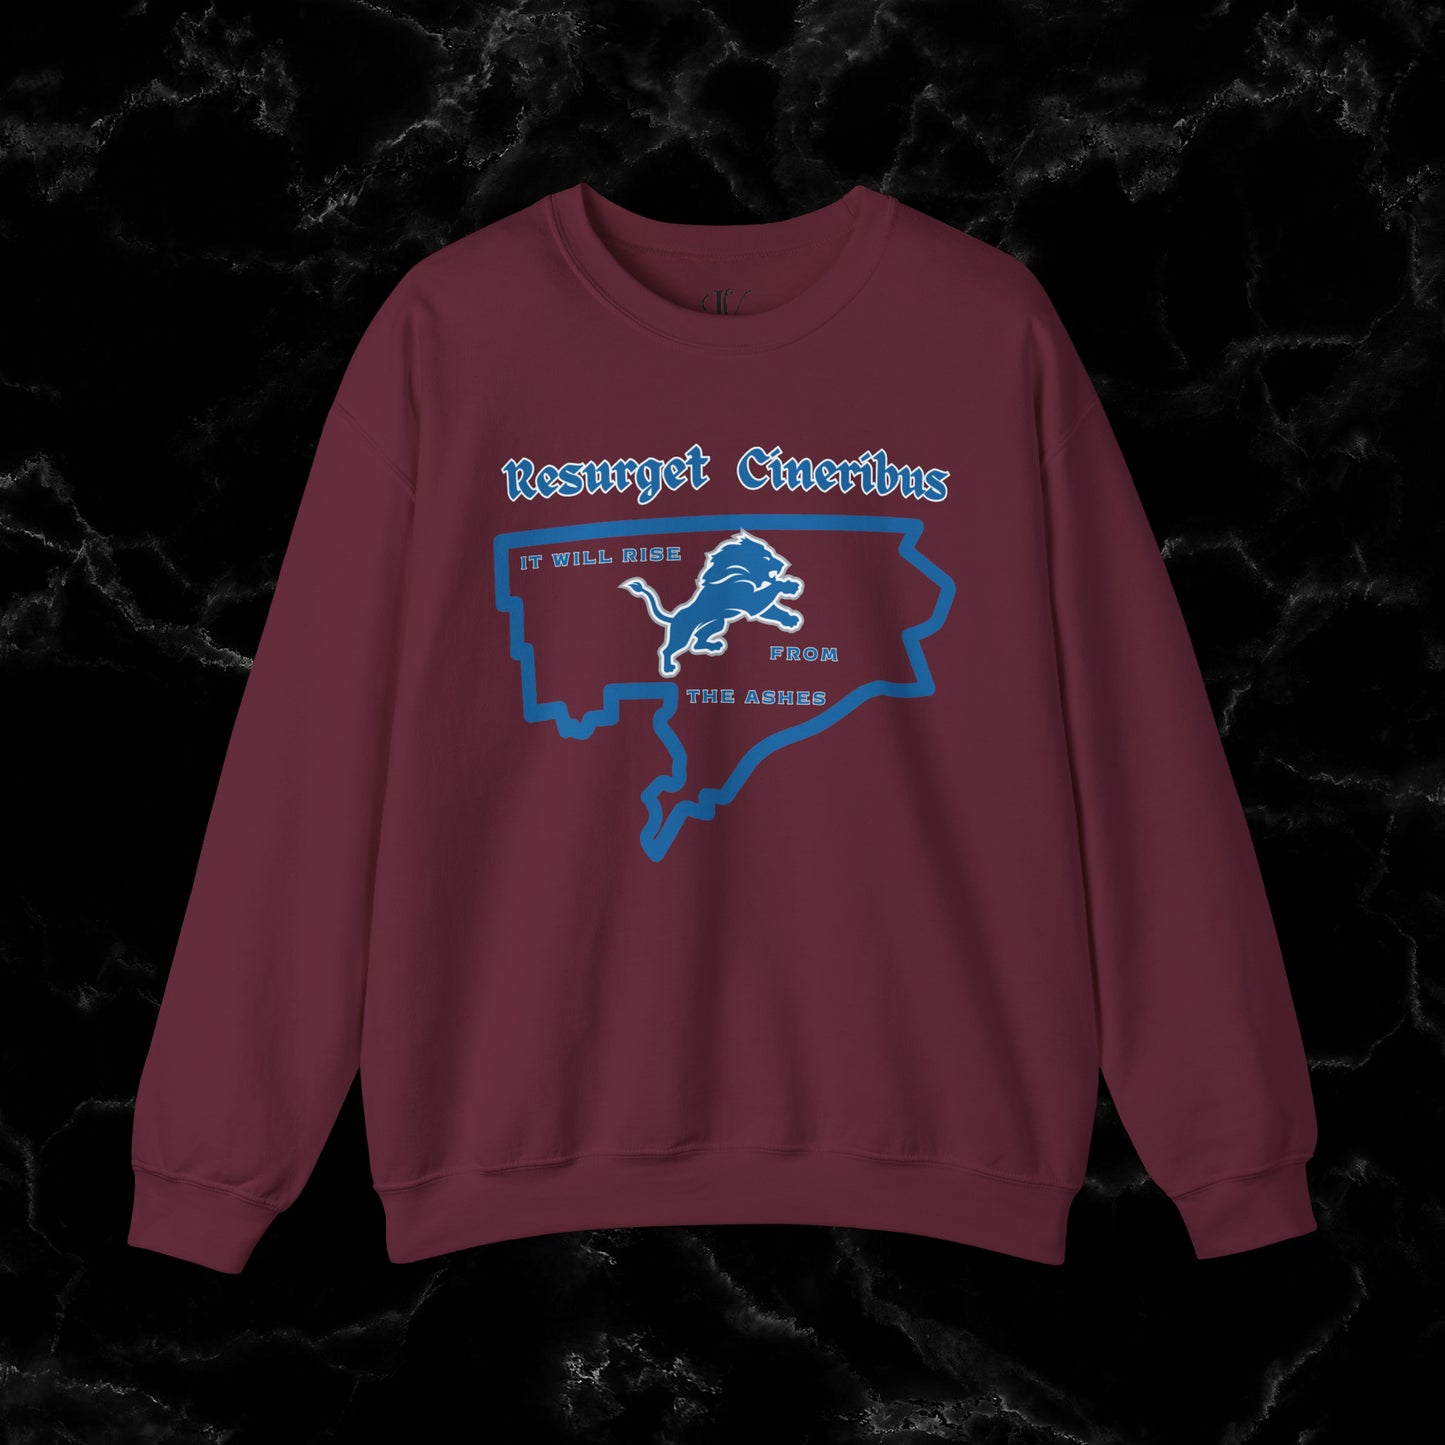 Resurget Cineribus Unisex Crewneck Sweatshirt - Latin Inspirational Gifts for Detroit Sports Football Fans Sweatshirt S Maroon 